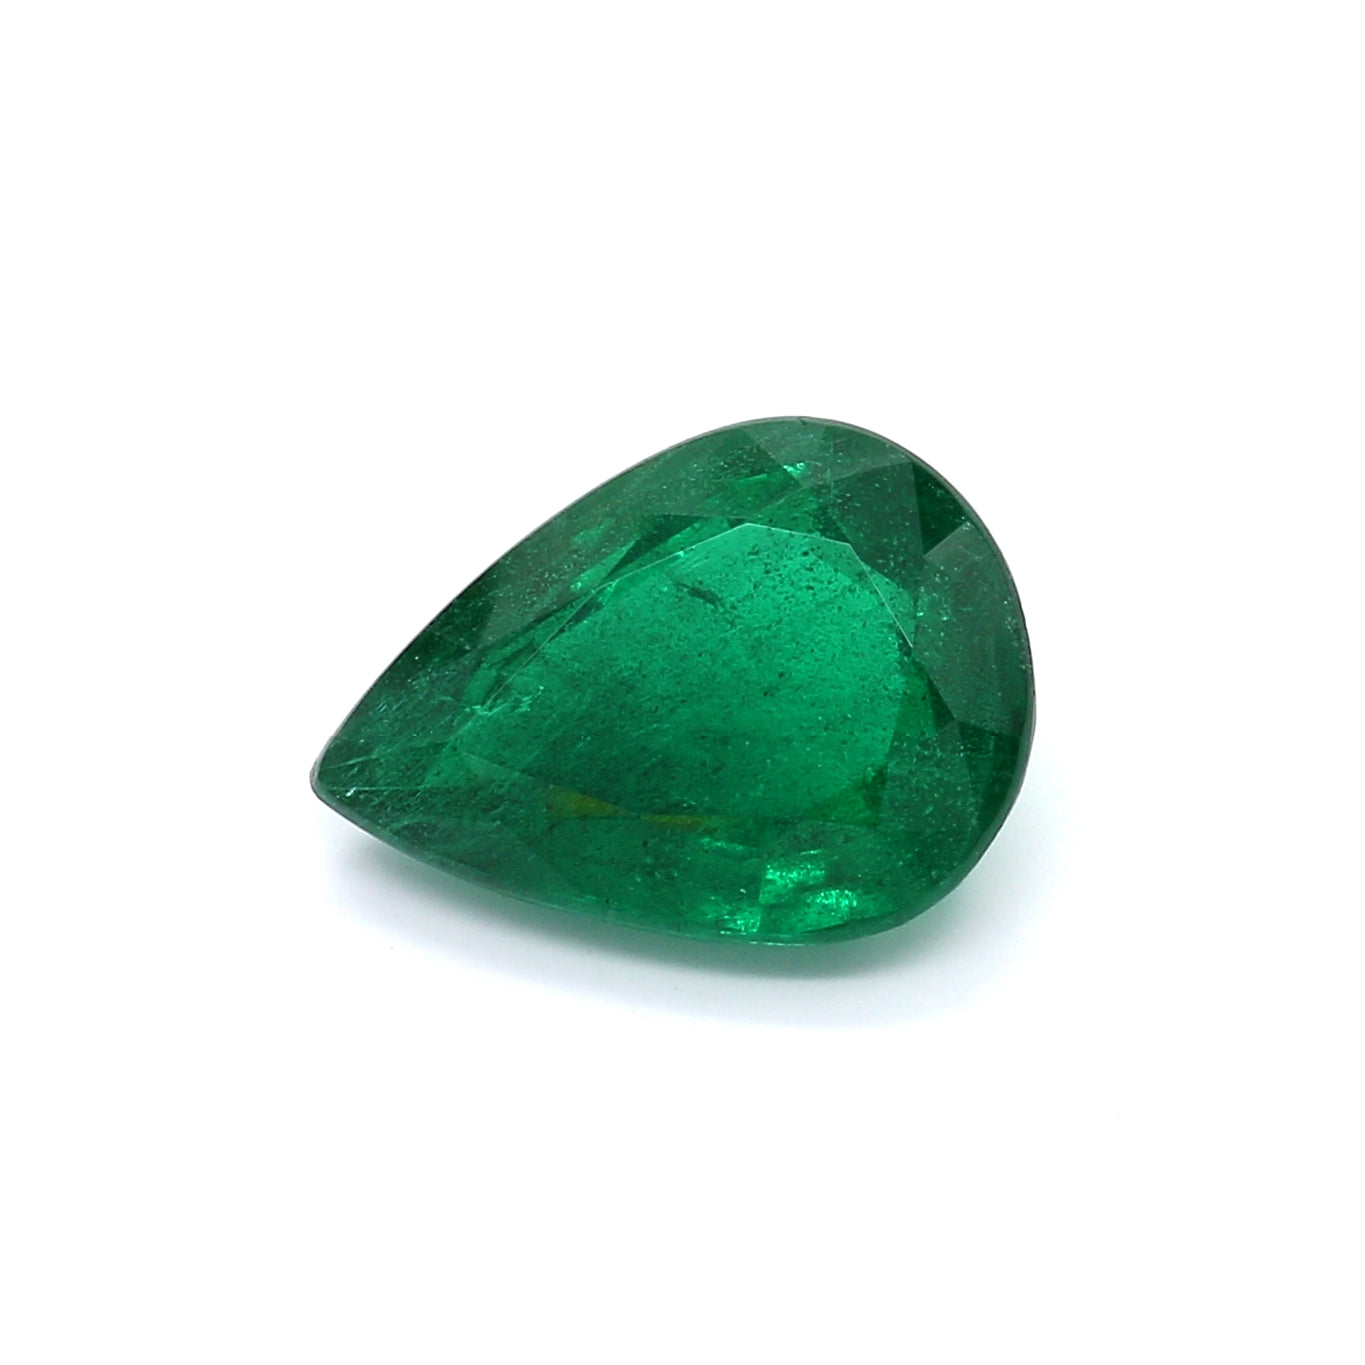 3.43ct Yellowish Green, Pear Shape Emerald, Slightly Oiled, Brazil - 12.81 x 9.34 x 5.10mm